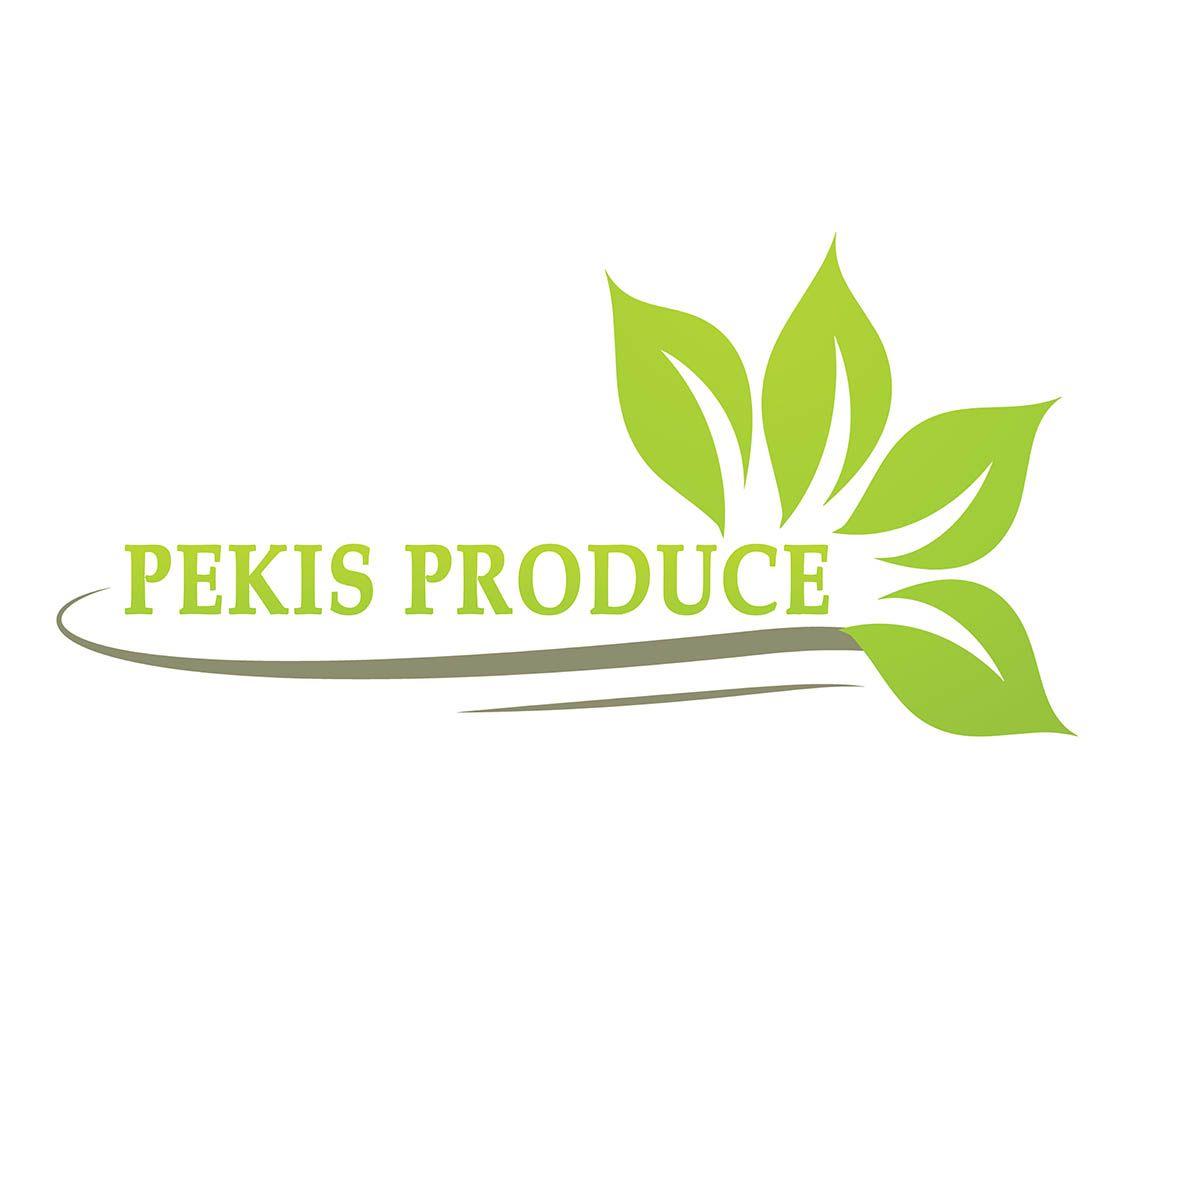 Produce Logo - Pekis Produce Logo Designed at Jasmai Media Solution ~ Jasmai Media ...